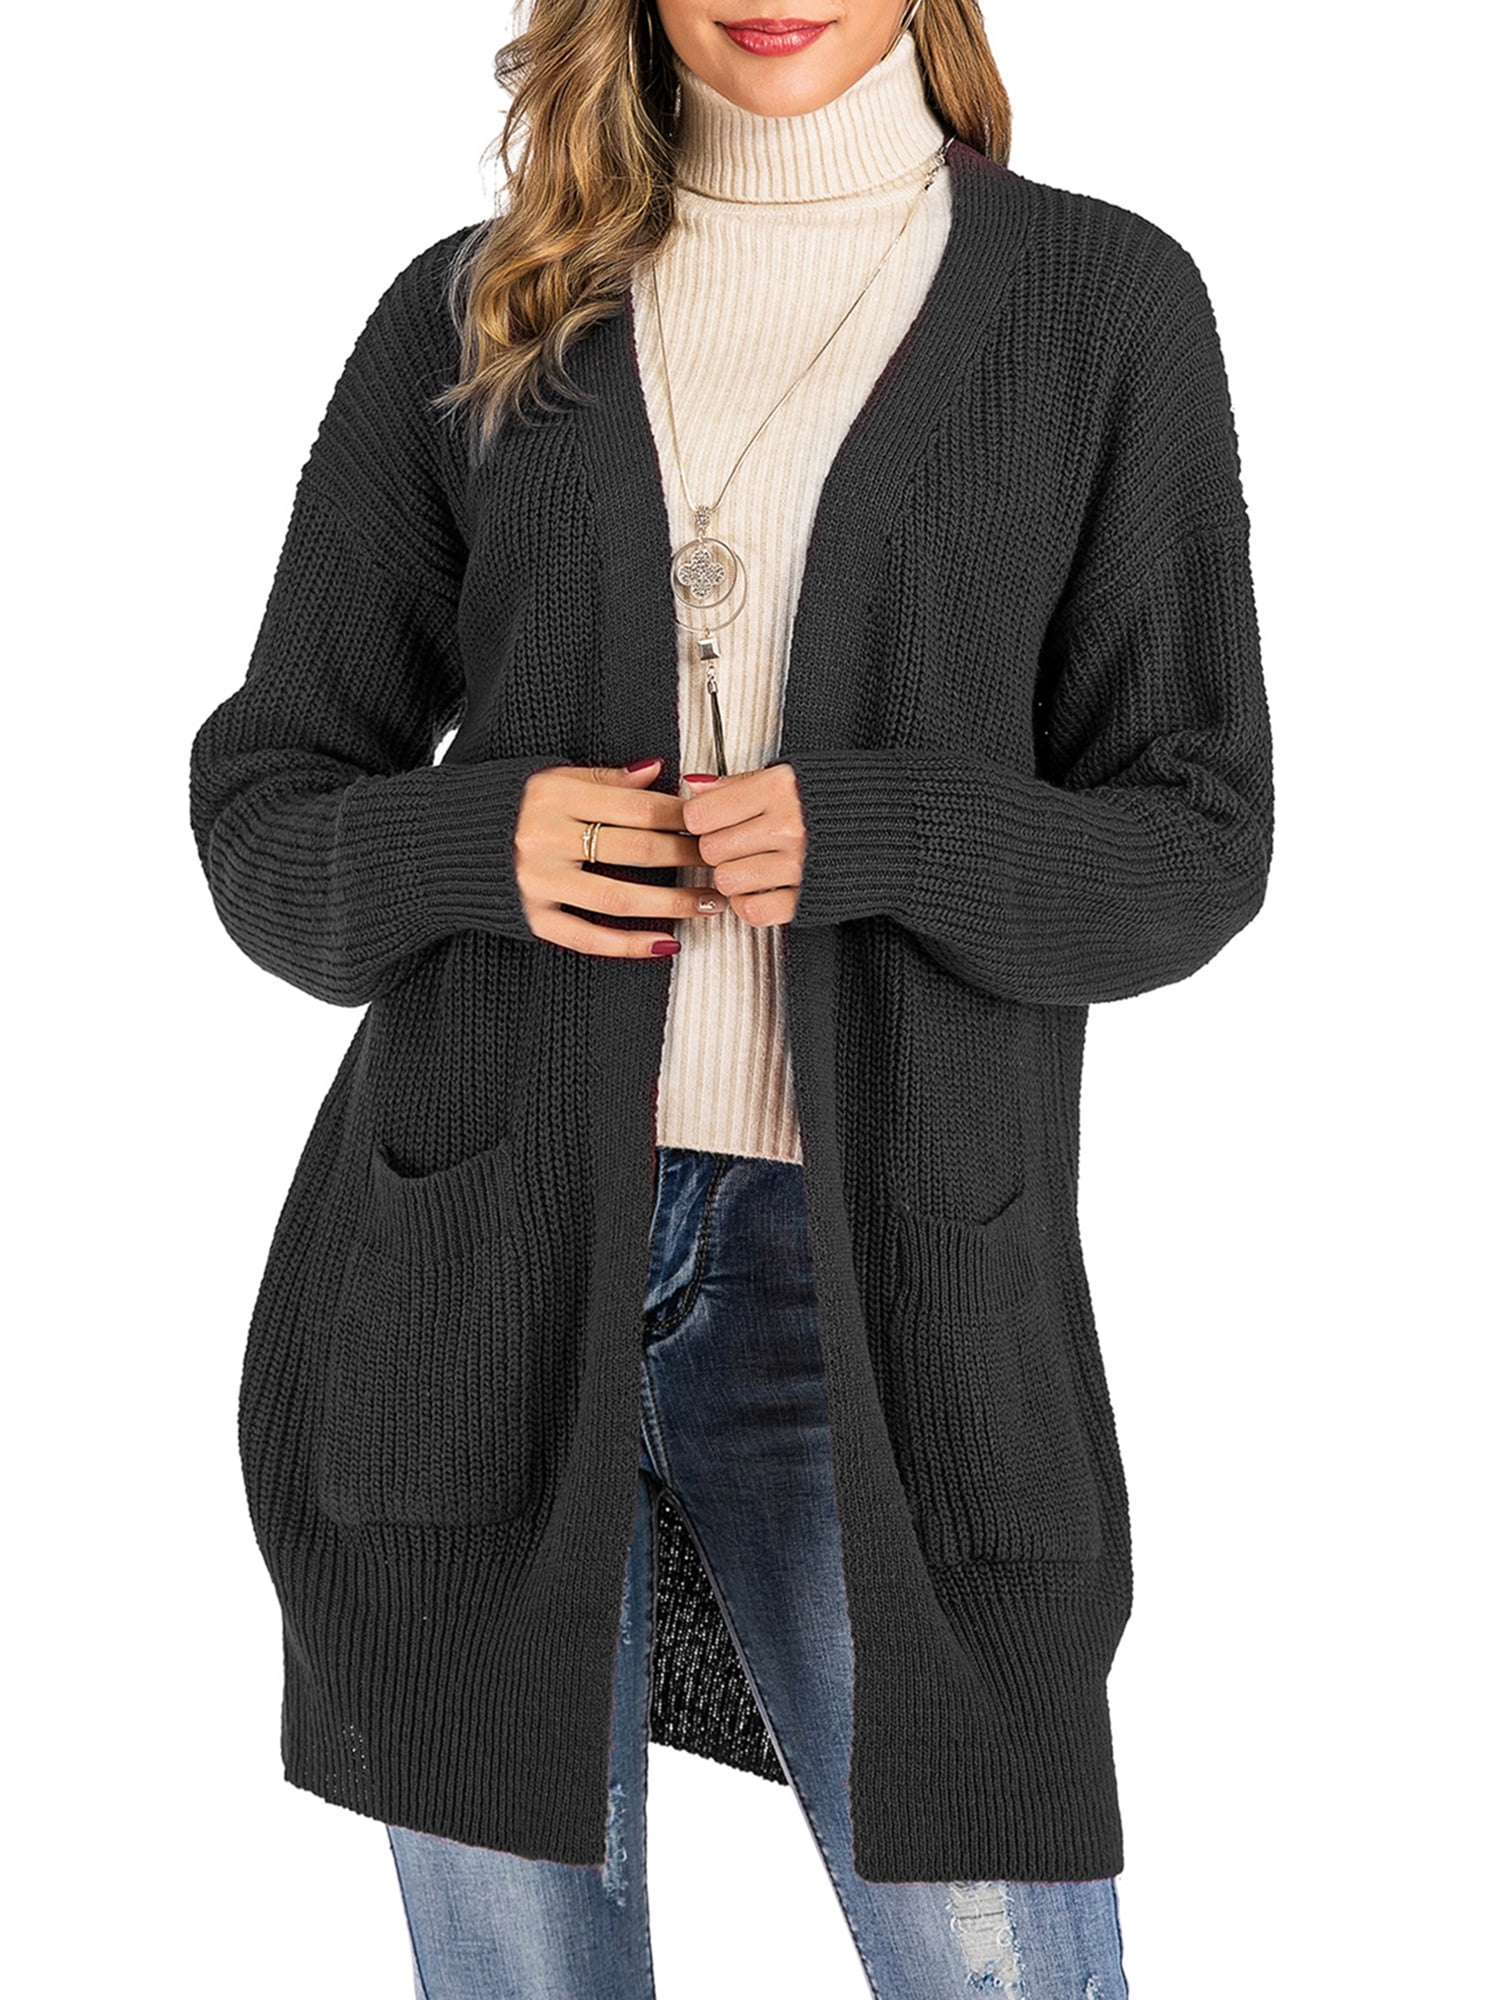 SAYFUT Women's Open Front Knitted Cardigan Sweater Black Long Cardigan ...